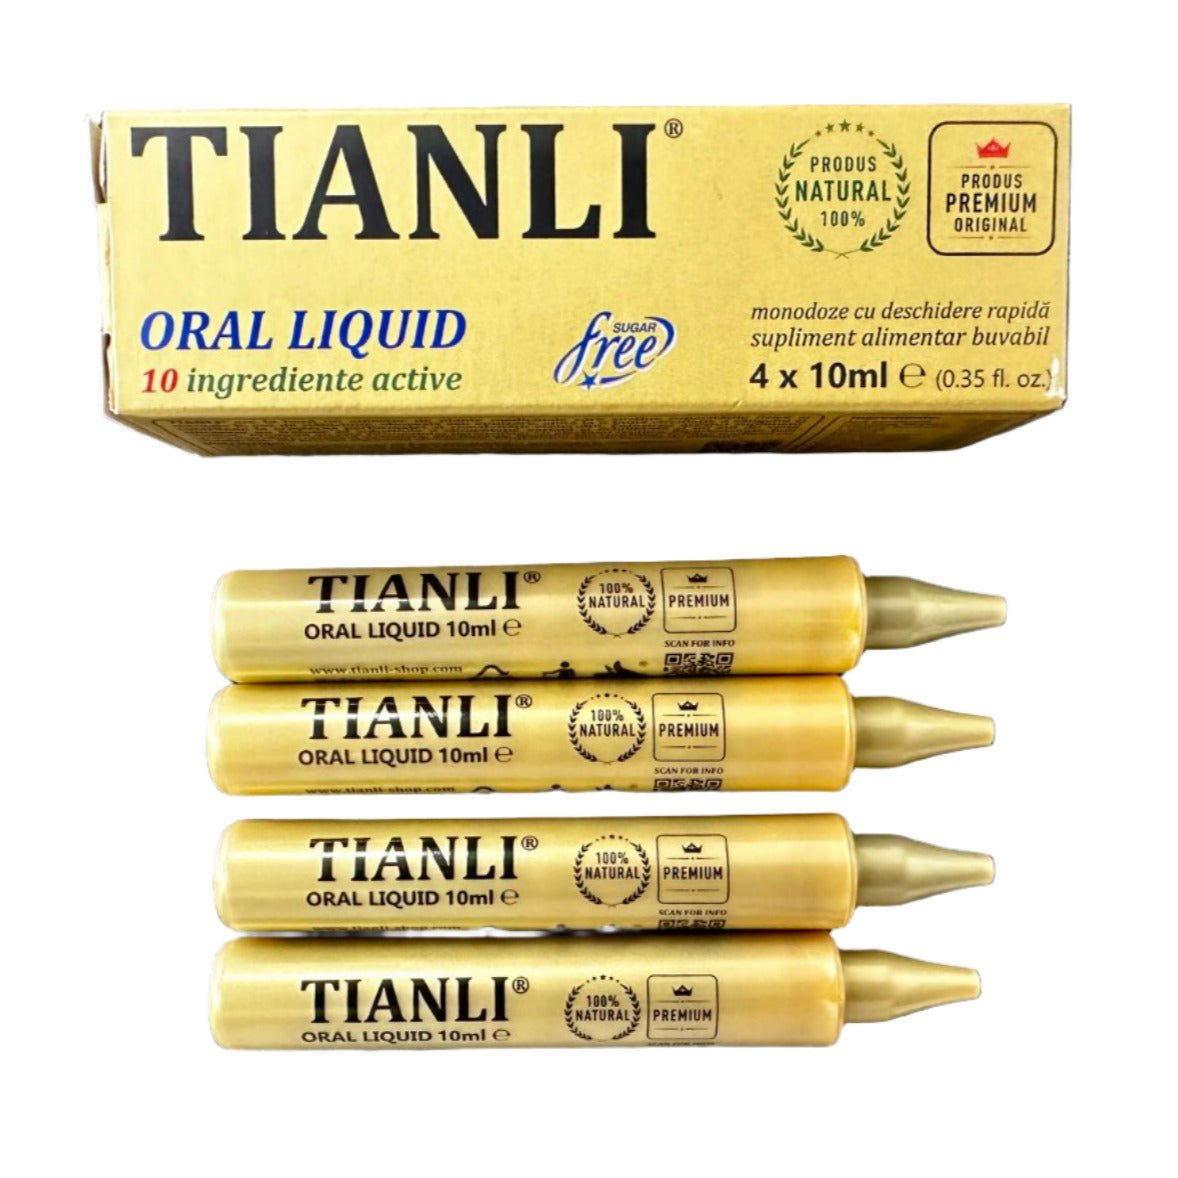 Tianli Oral Liquid, 4 fiole, Energo Vitalis - 5941897300024